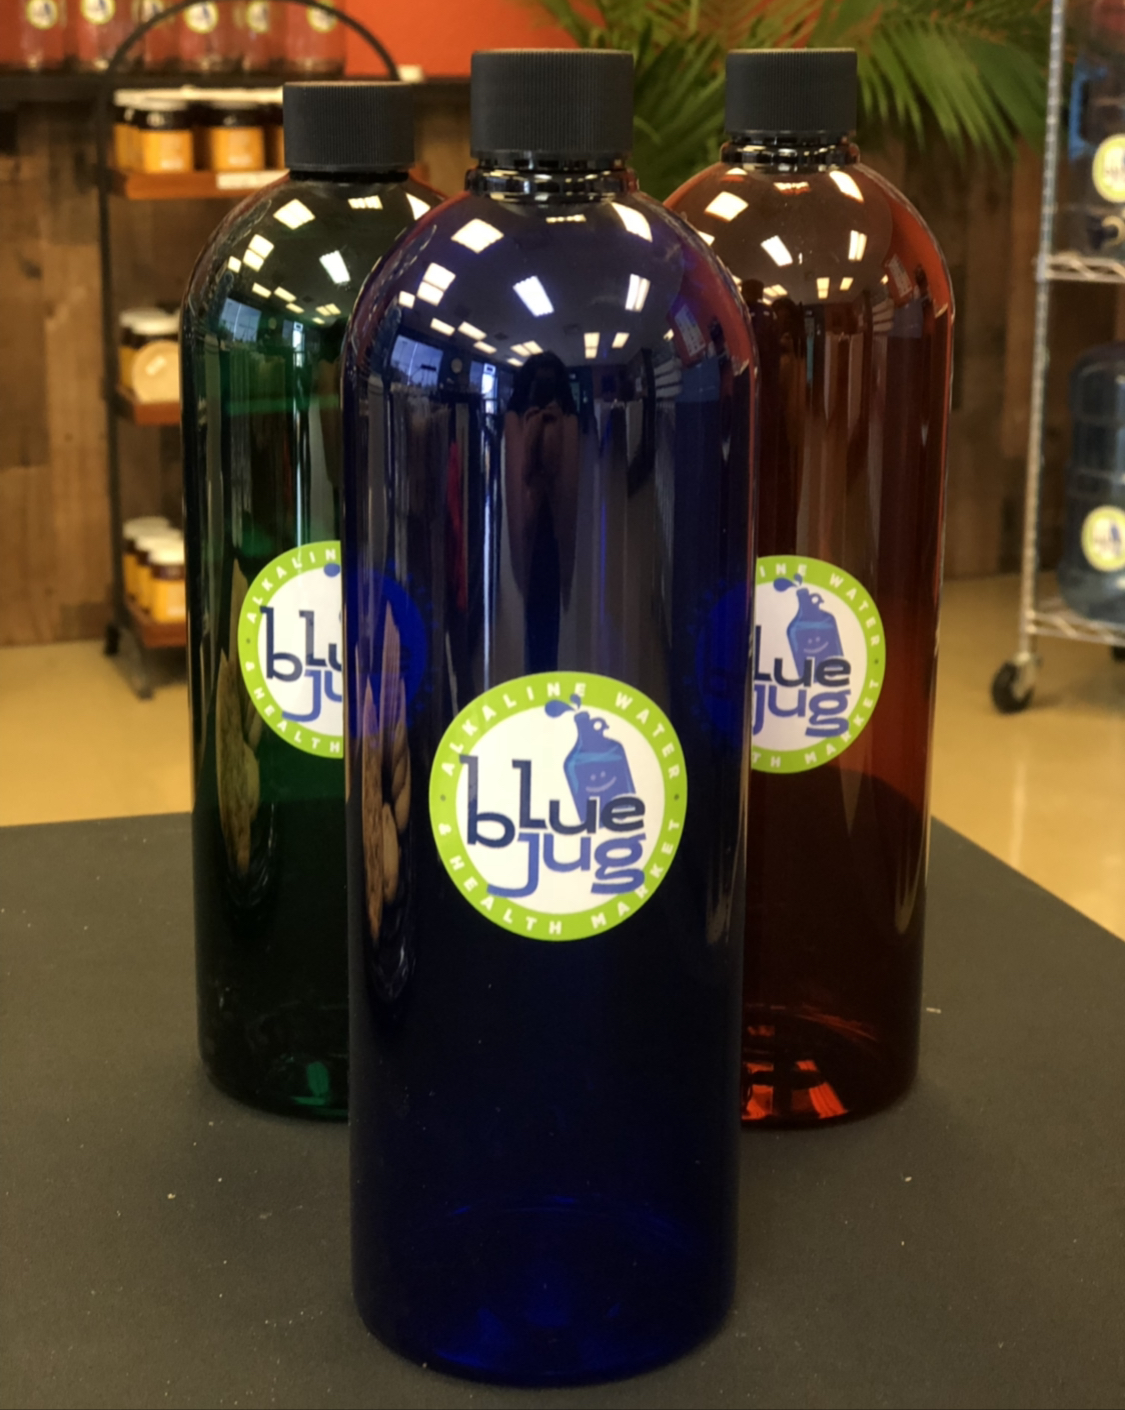 Three Blue Jug Bottles featuring the Blue Jug Logo